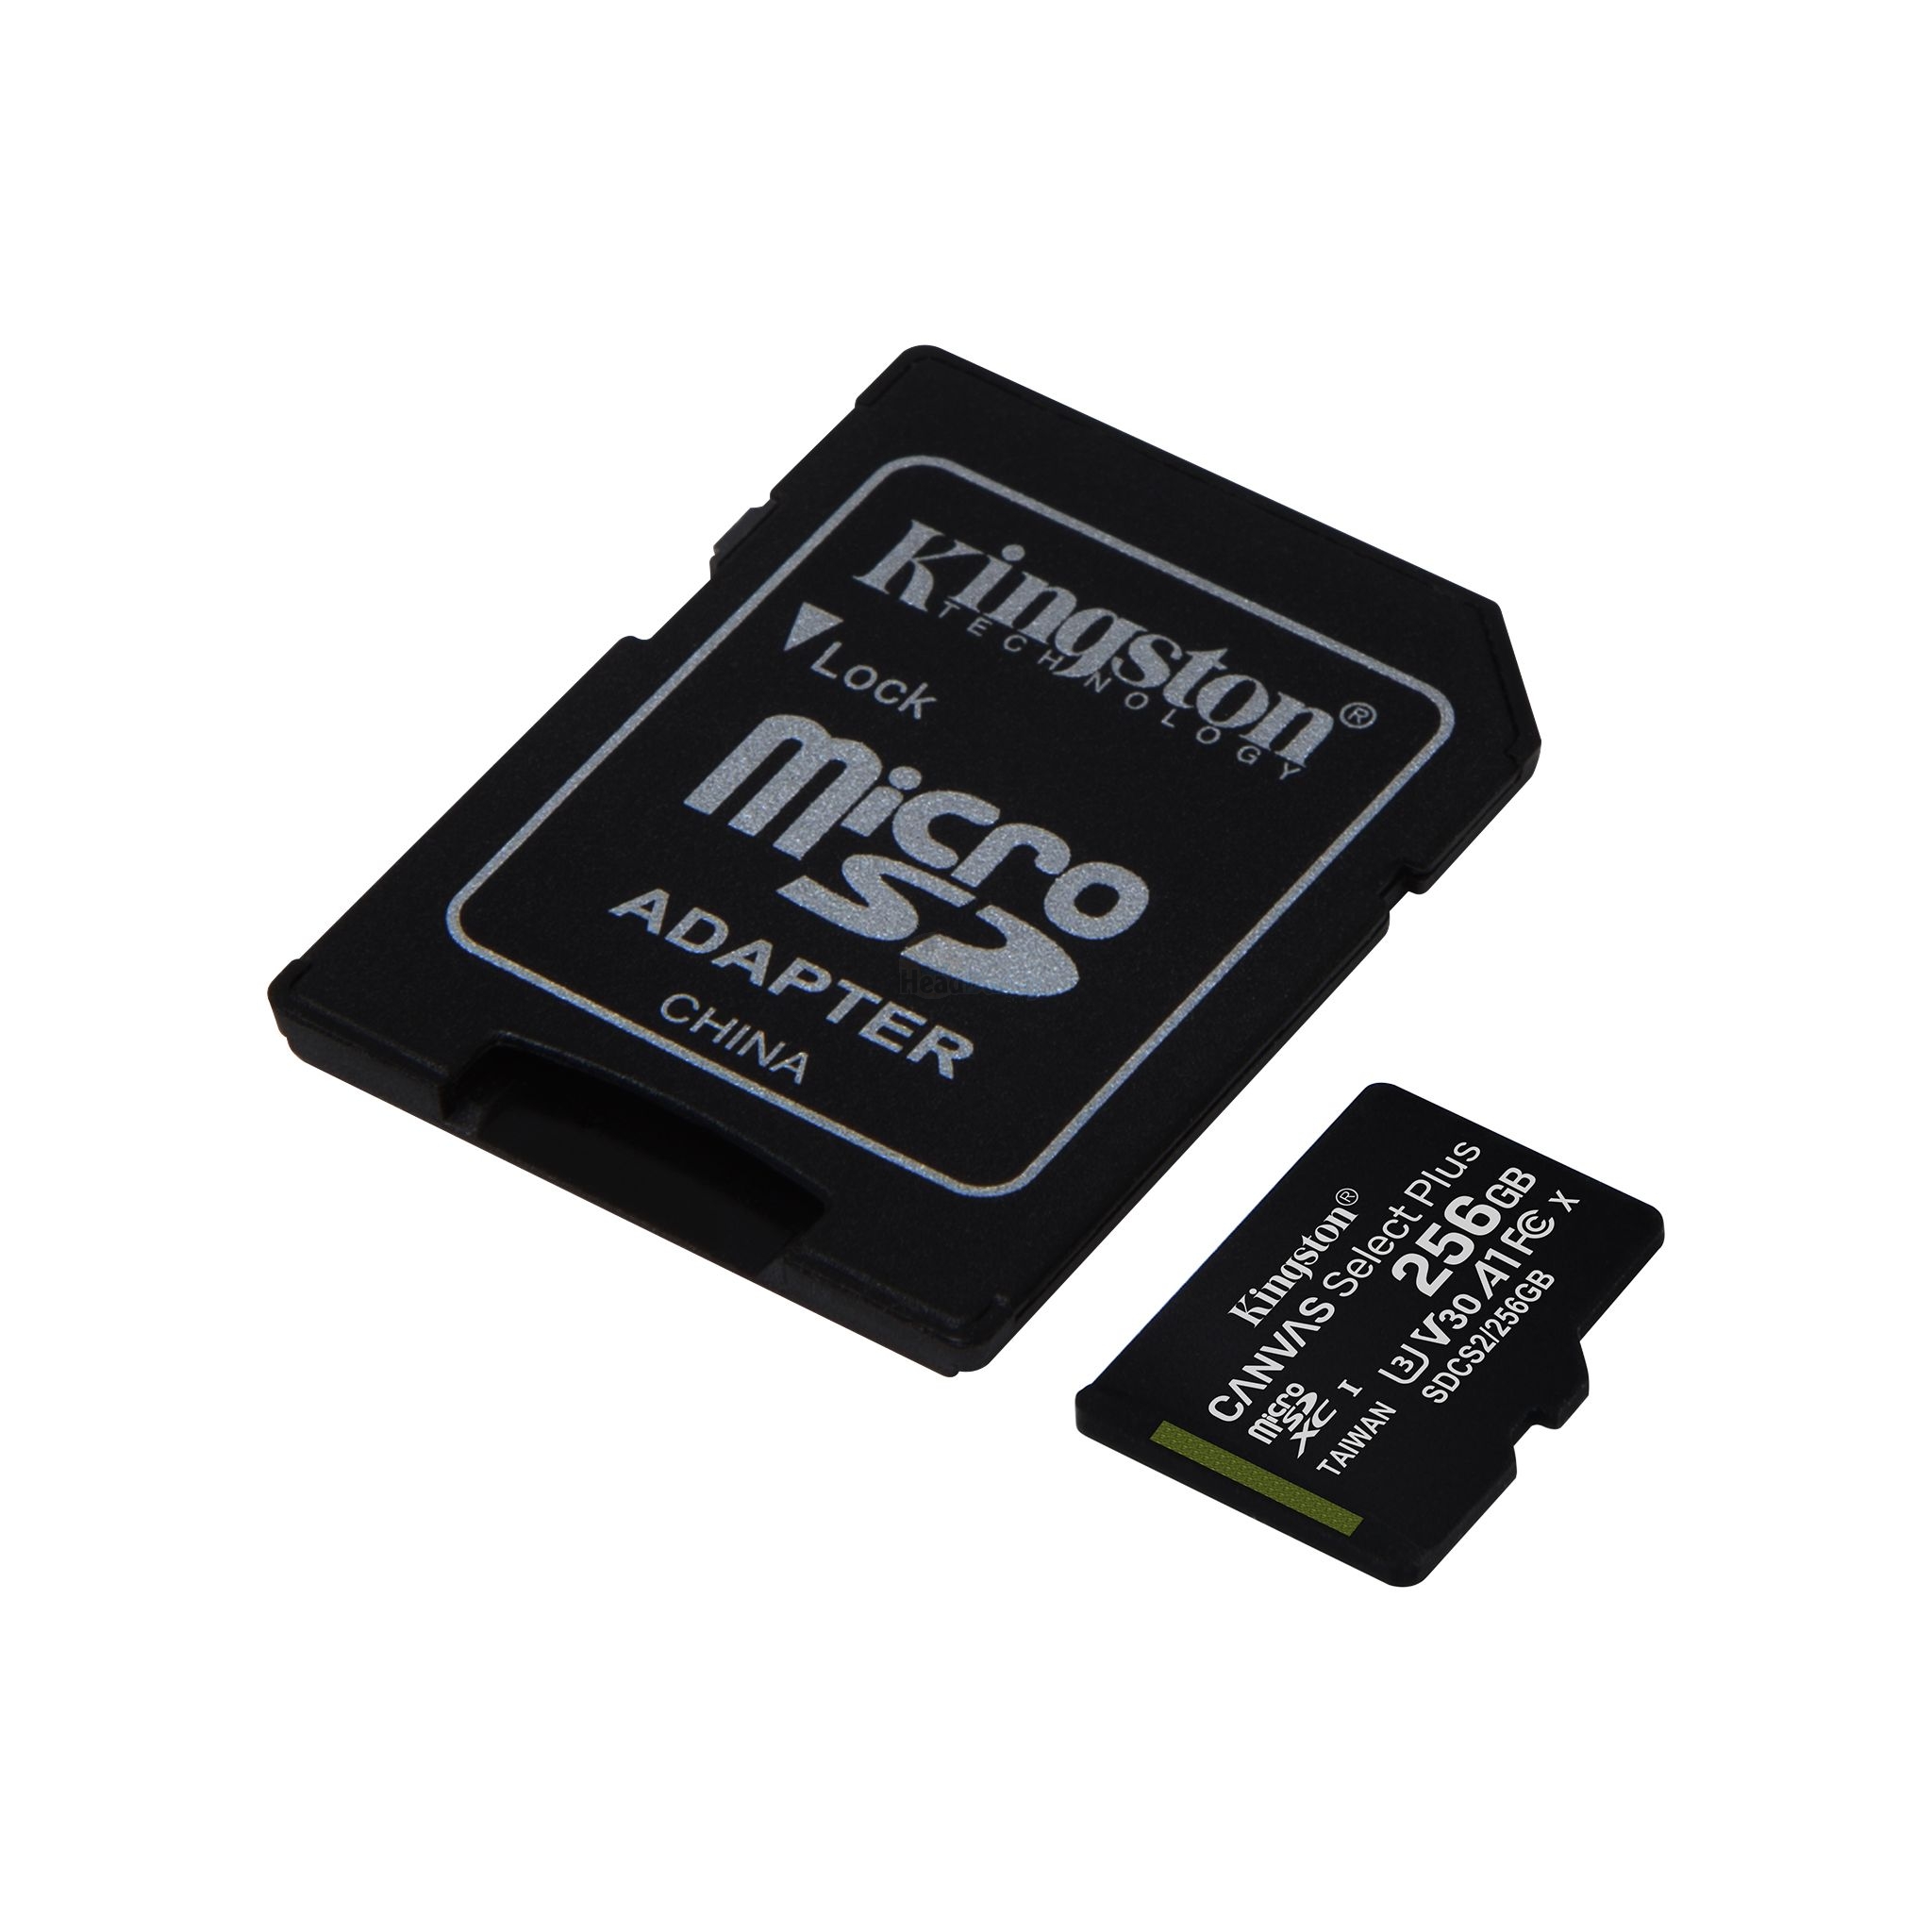 256GB Micro SD Card KINGSTON Canvas Select Plus SDCS2 (100MB/s.)